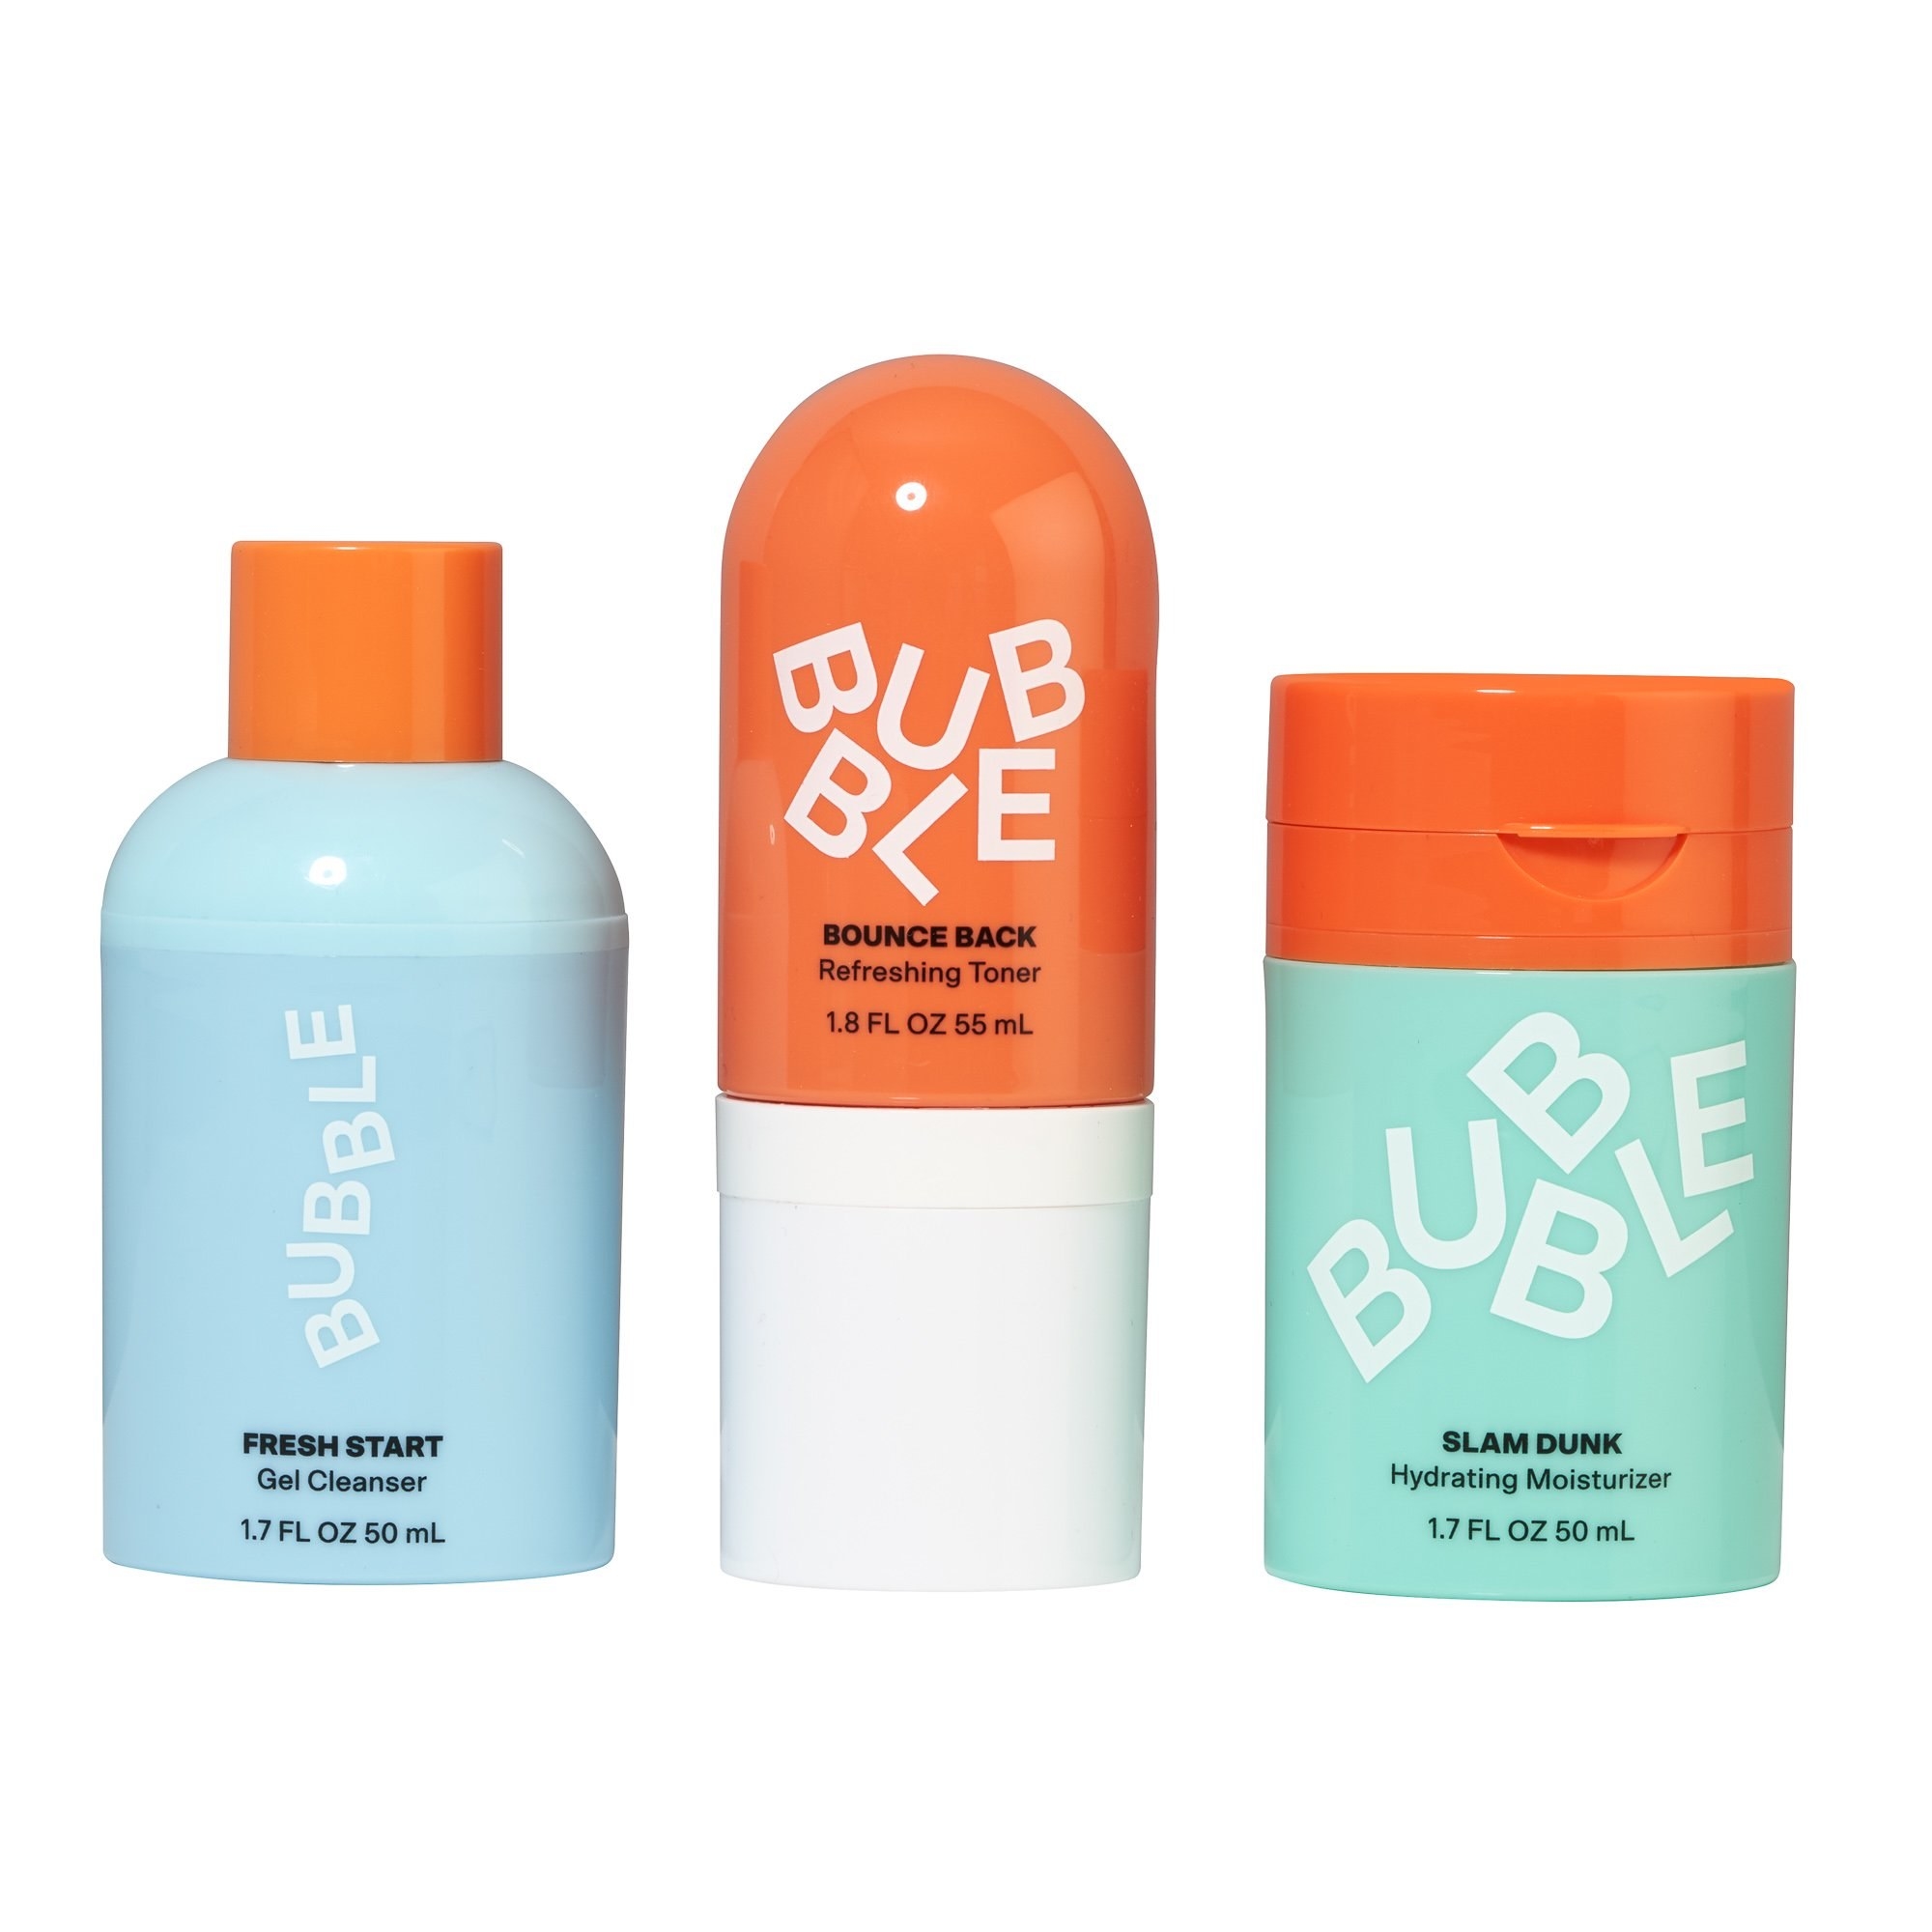 Three bottles of skincare: gel cleanser, toner, and moisturizer